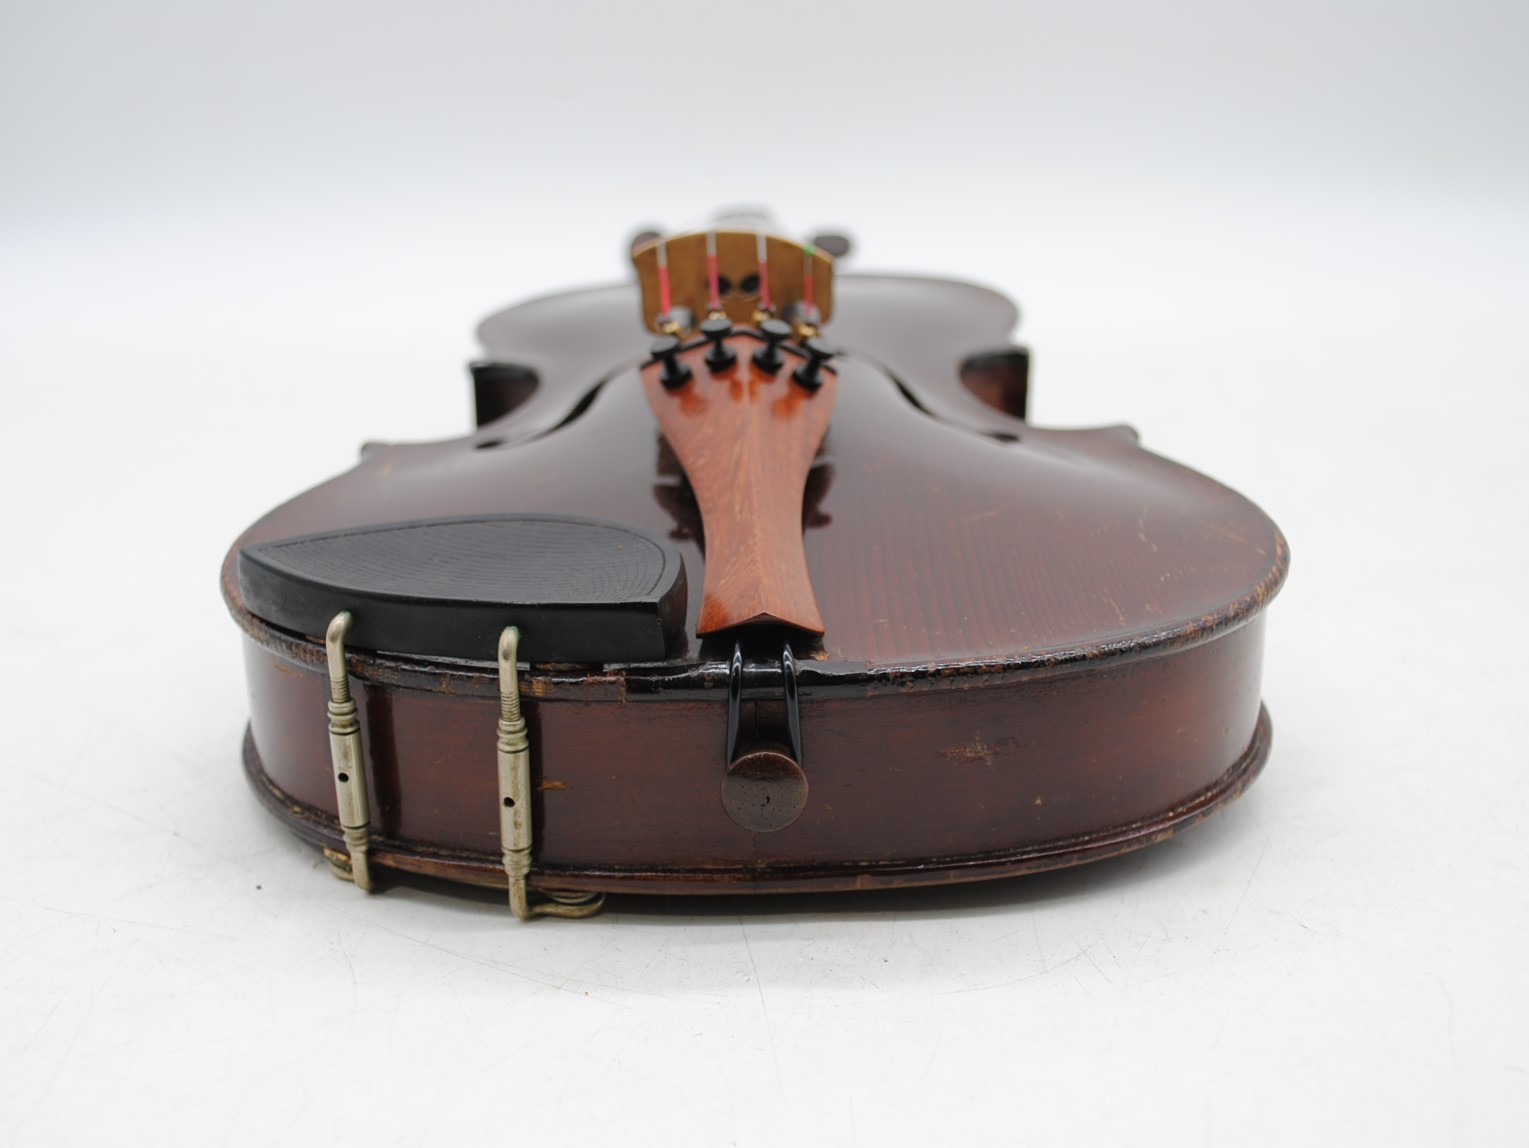 A 3/4 size violin, with Skylark Brand hard case - length of violin 56cm - Image 10 of 12